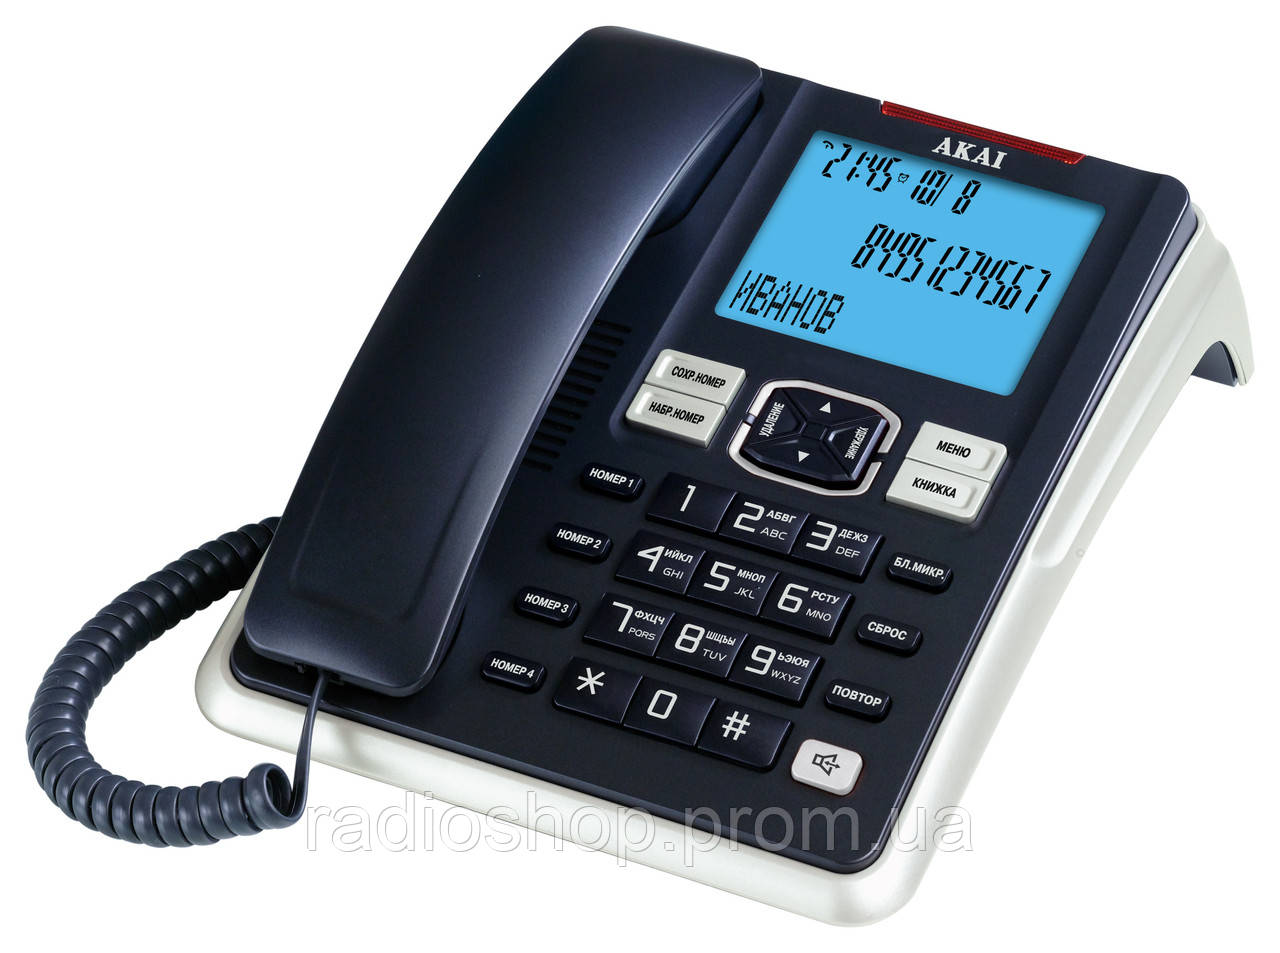 Стаціонарний телефон АОН/Caller ID AKAI AT-A19CJ